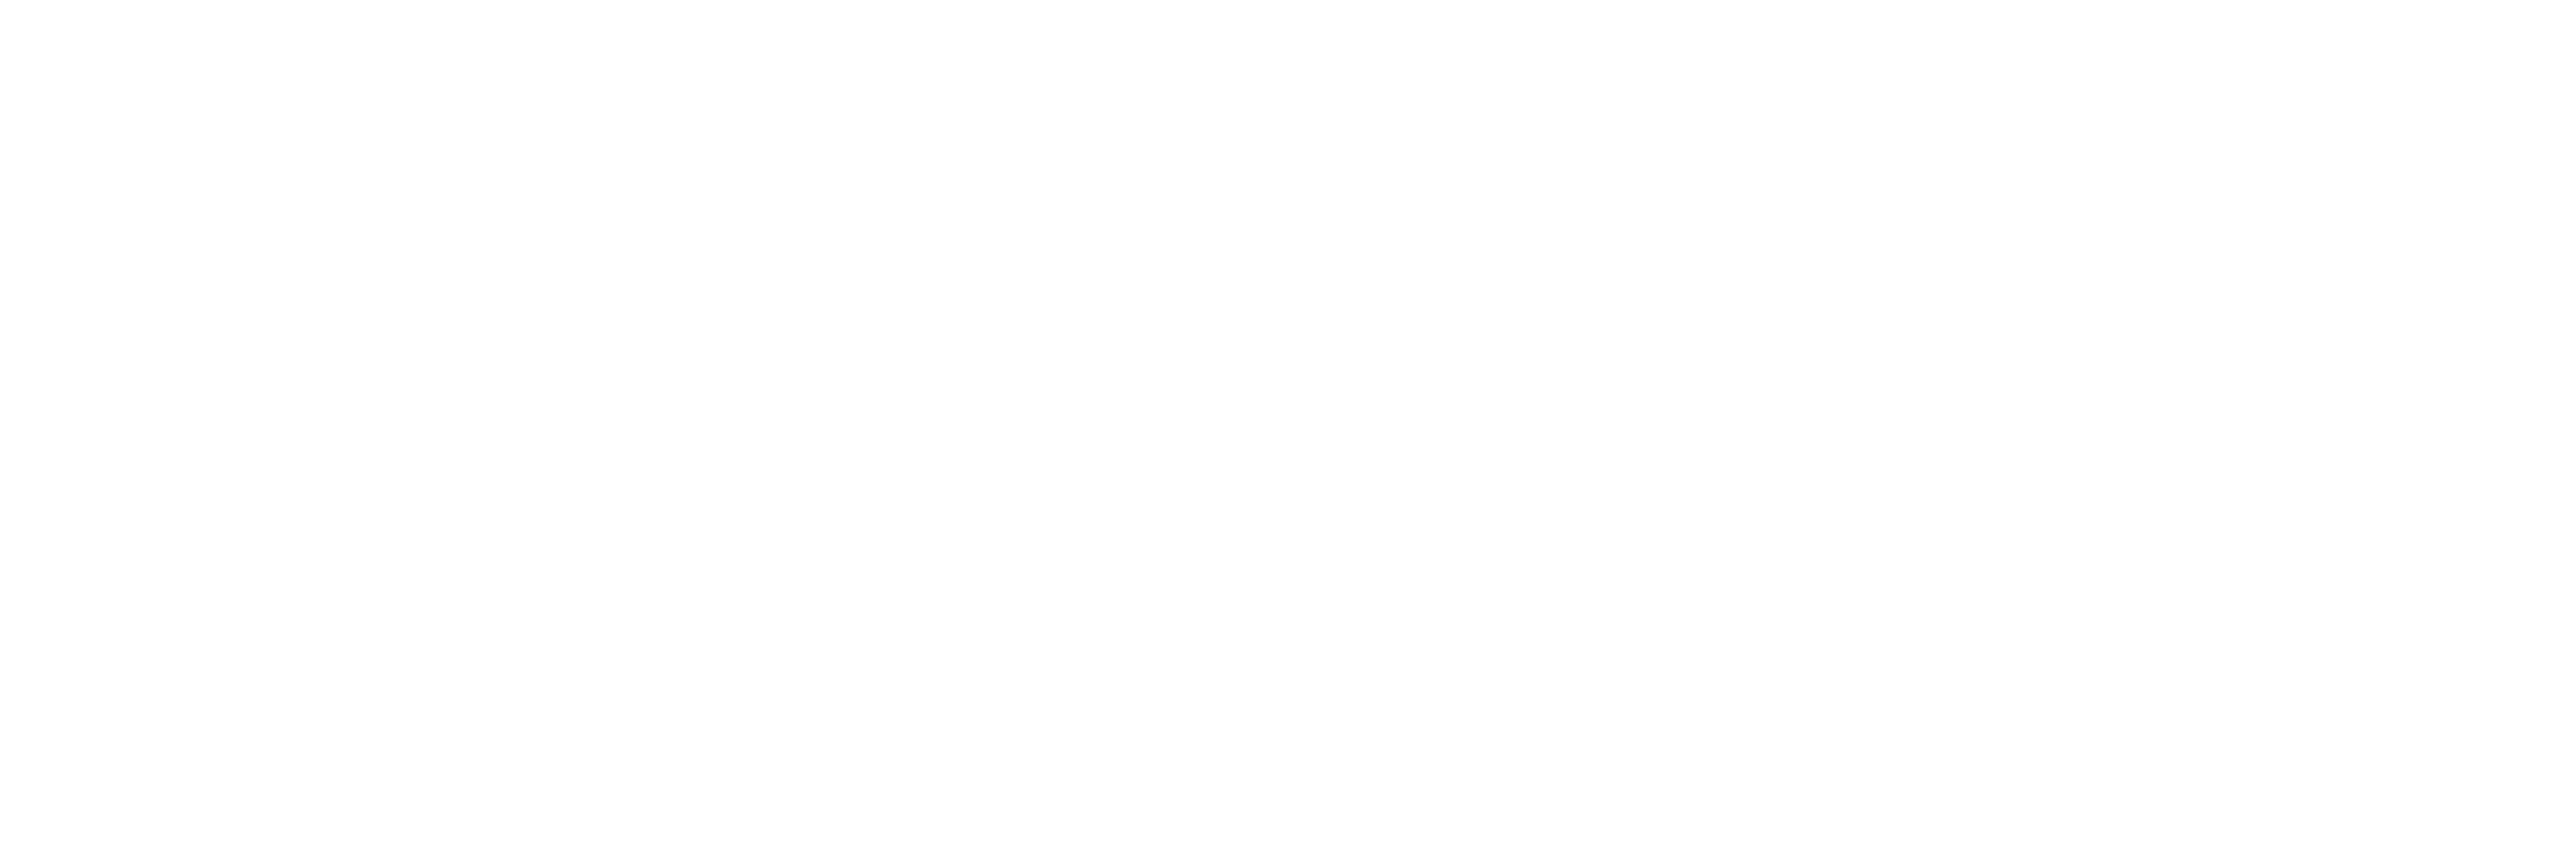 beyond magazine logo